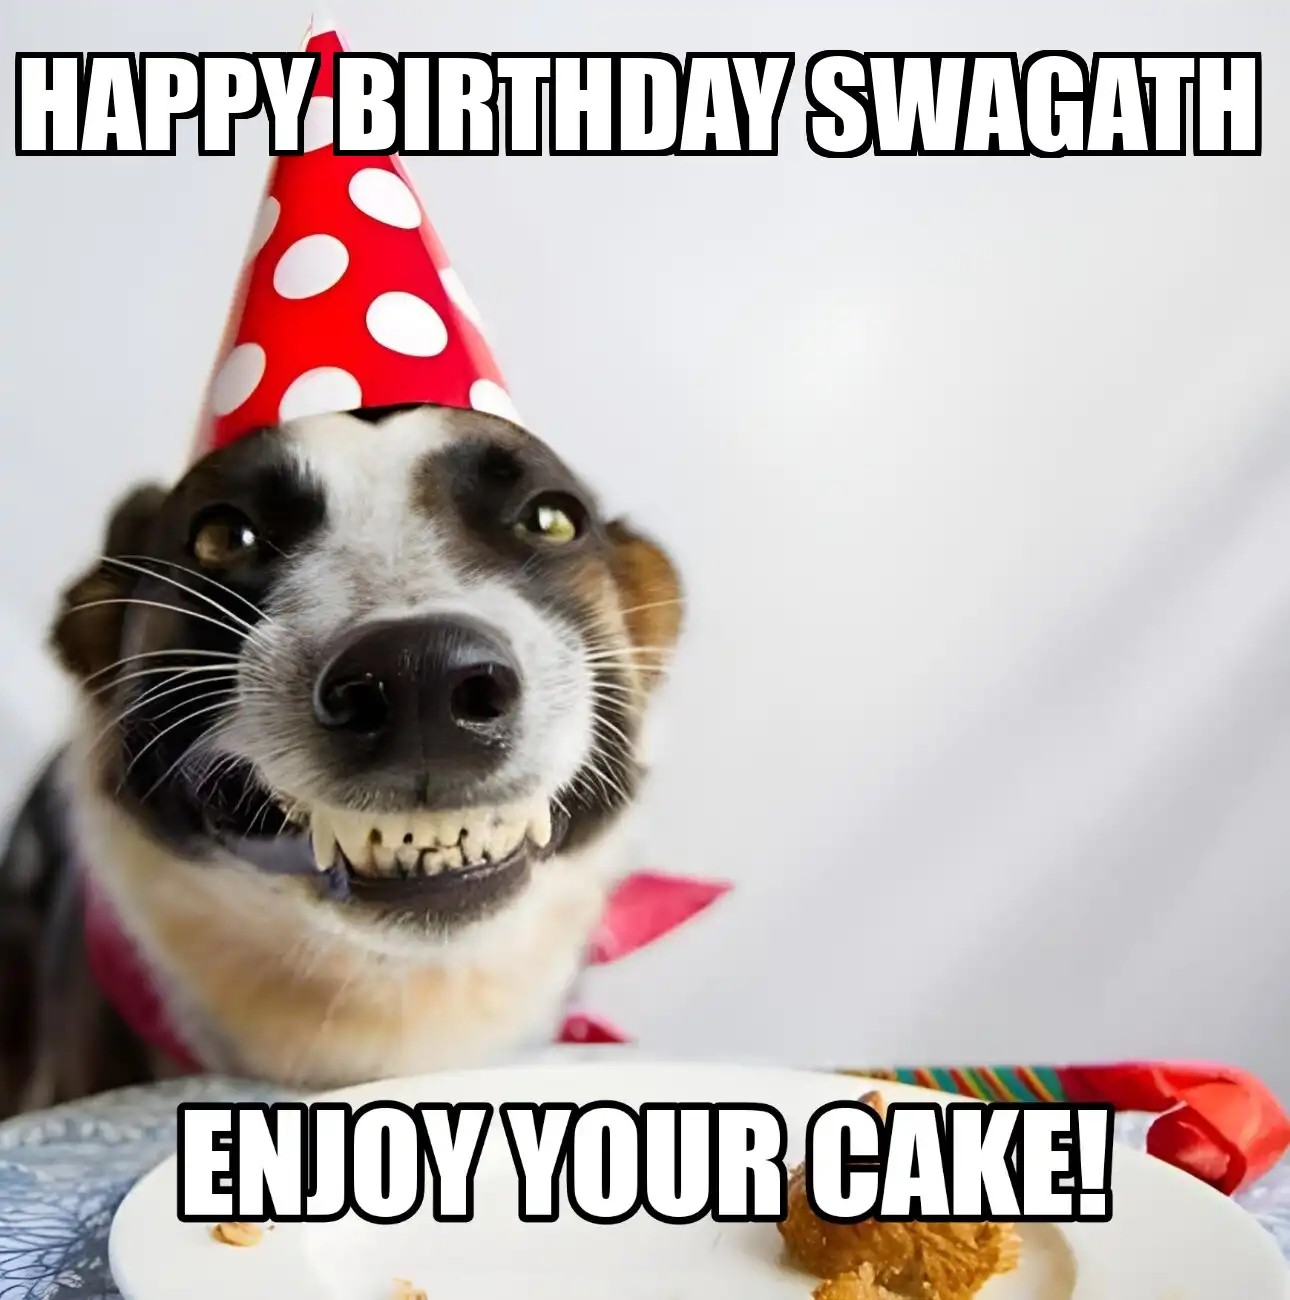 Happy Birthday Swagath Enjoy Your Cake Dog Meme